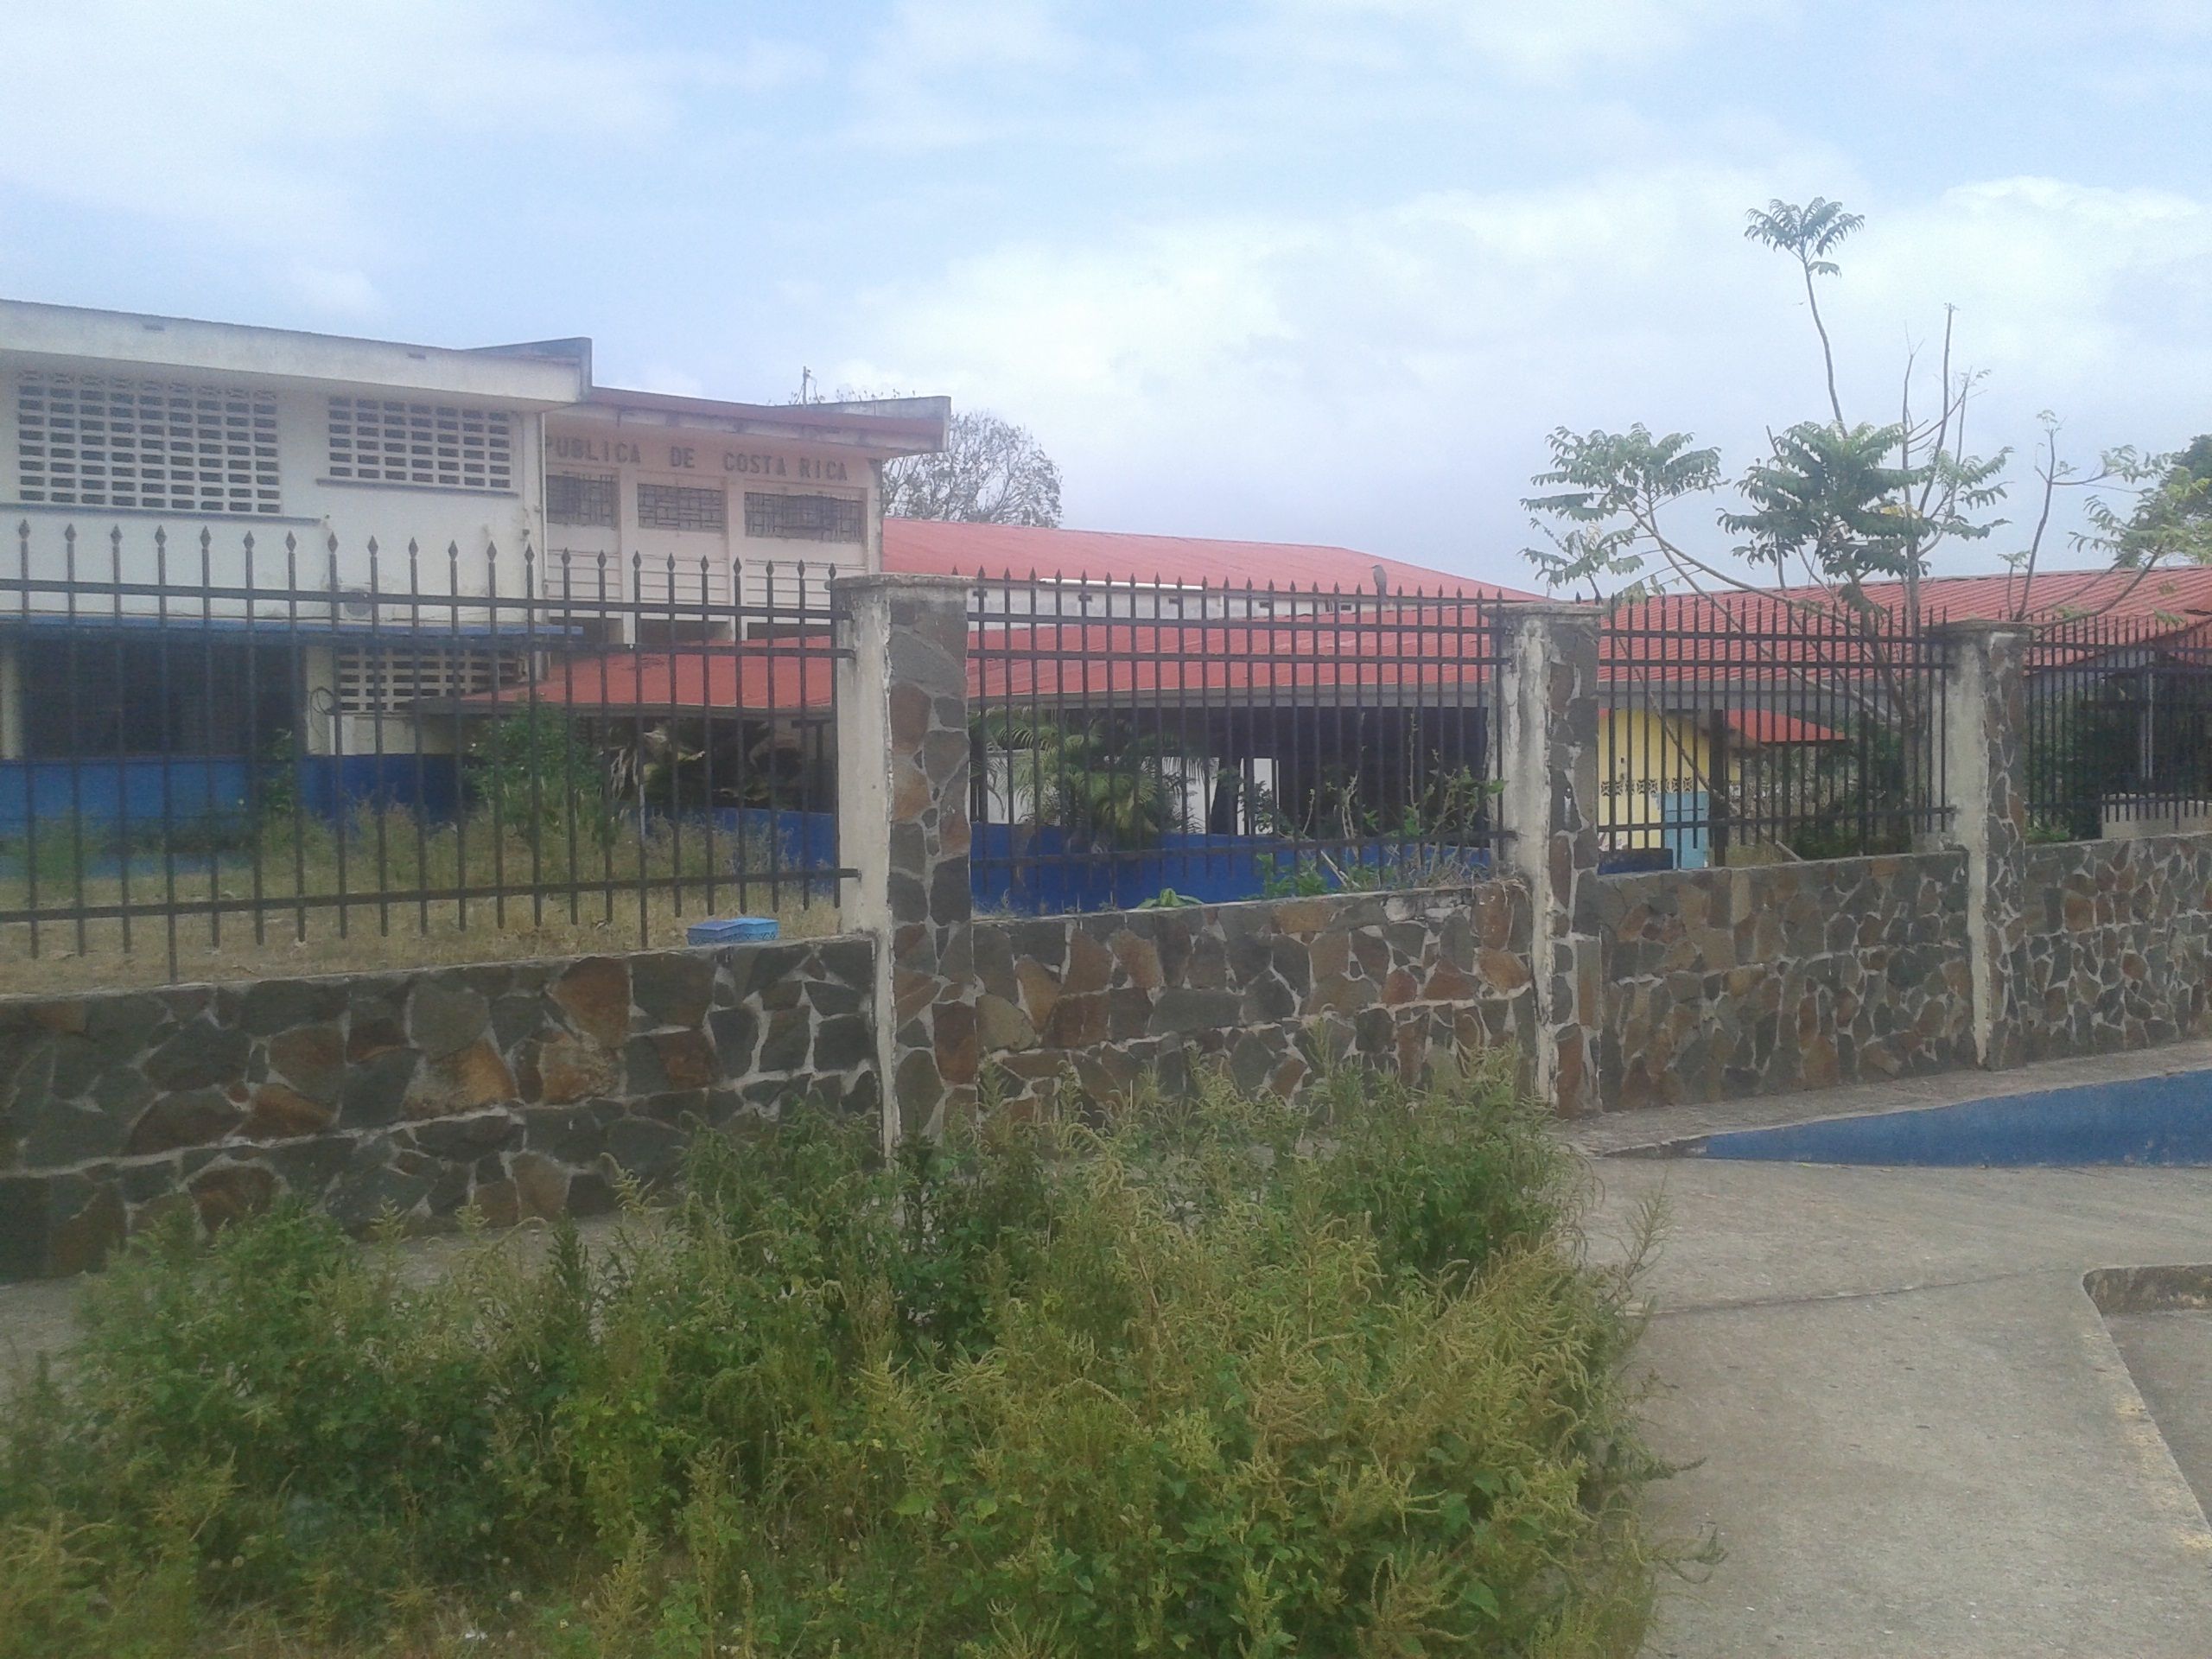 Incertidumbre rodea a los estudiantes de la escuela Costa Rica 